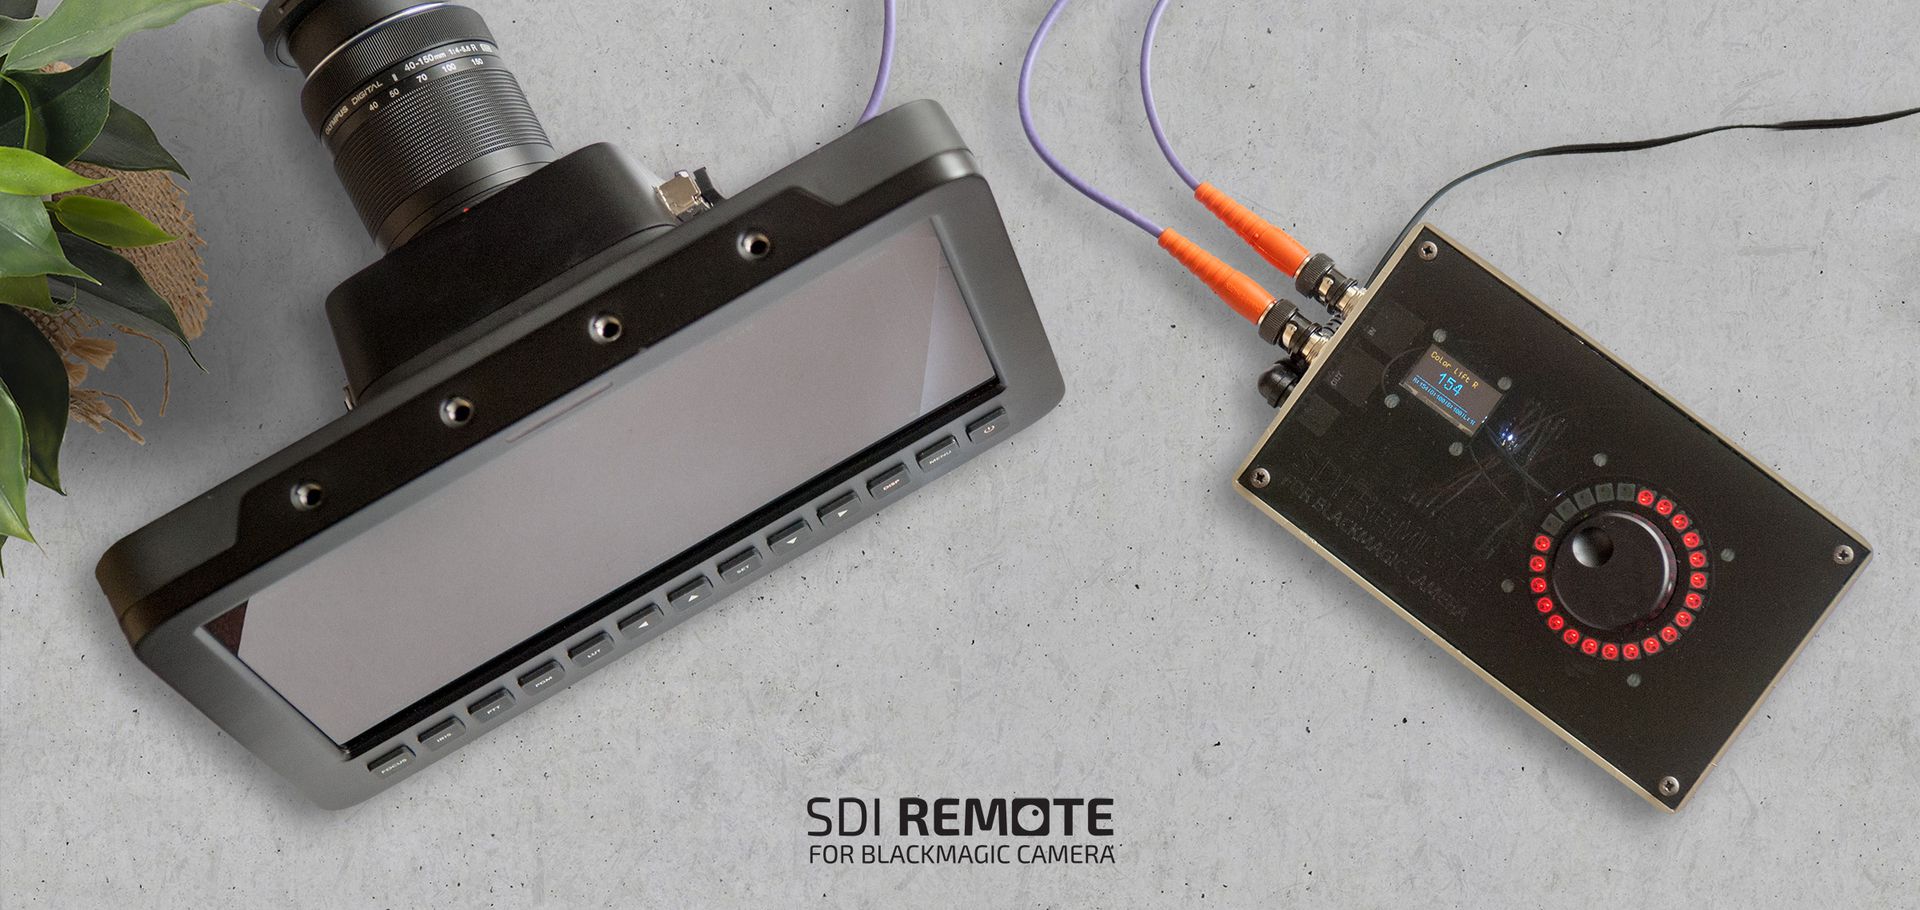 <a href="https://3210.lu/english-blog/sdi-remote-for-black-magic-cameras/">SDI Remote</a> - Remote control unit for BlackMagic cameras.